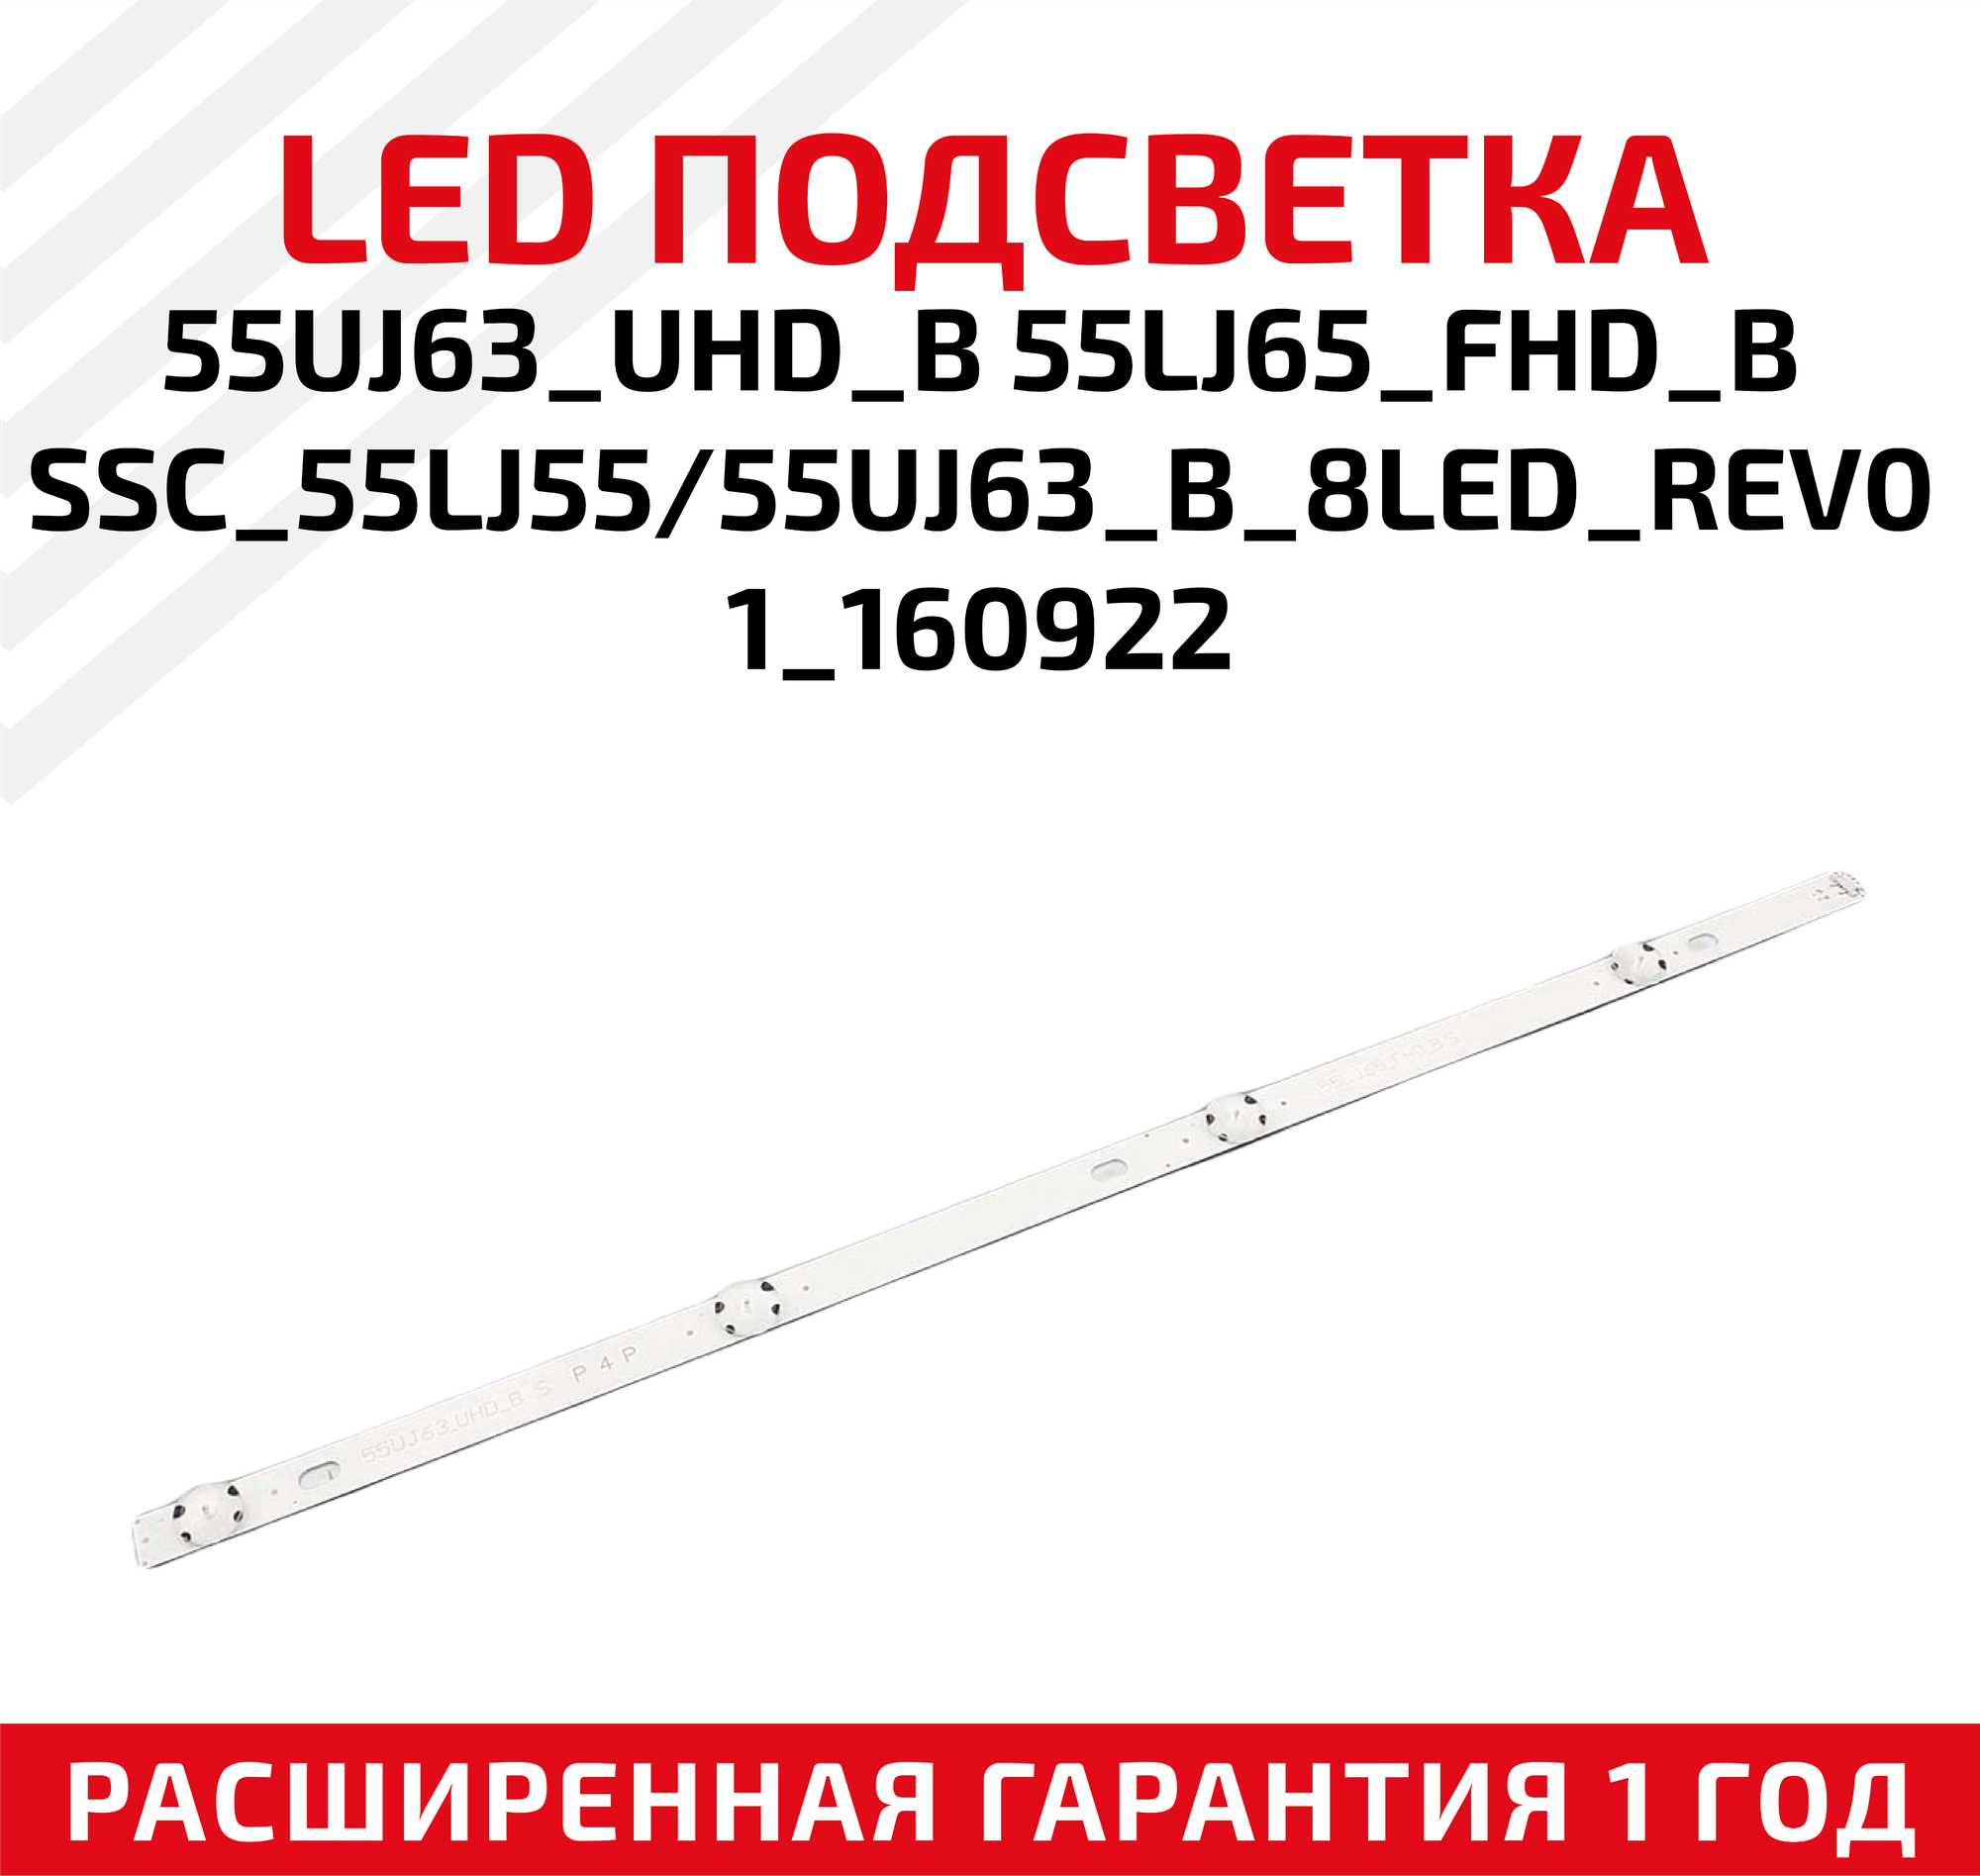 LED подсветка (светодиодная планка) для телевизора 55UJ63_UHD_B 55LJ65_FHD_B SSC_55LJ55/55UJ63_B_8LED_REV01_160922